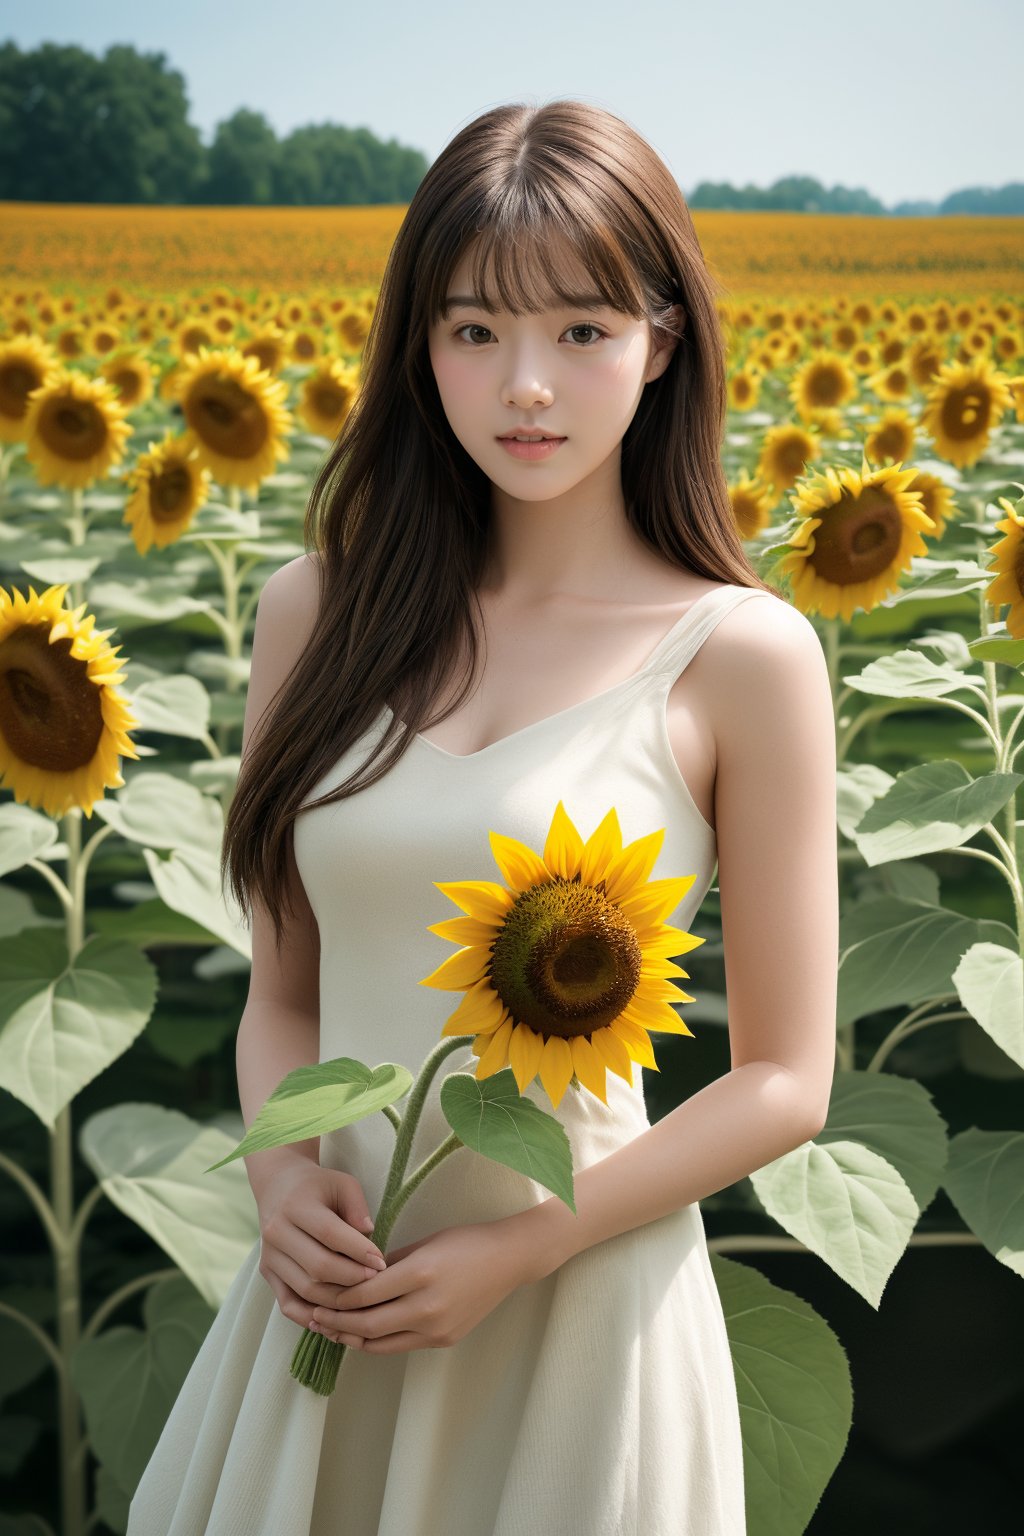  A beautiful woman. Sunflower field. Best Quality, Crazy Details and Sharp Focus, Masterpiece, Professional, Award Winning, Fine Detail, High Detail, UHD, 64k, Soft Look,1 girl 